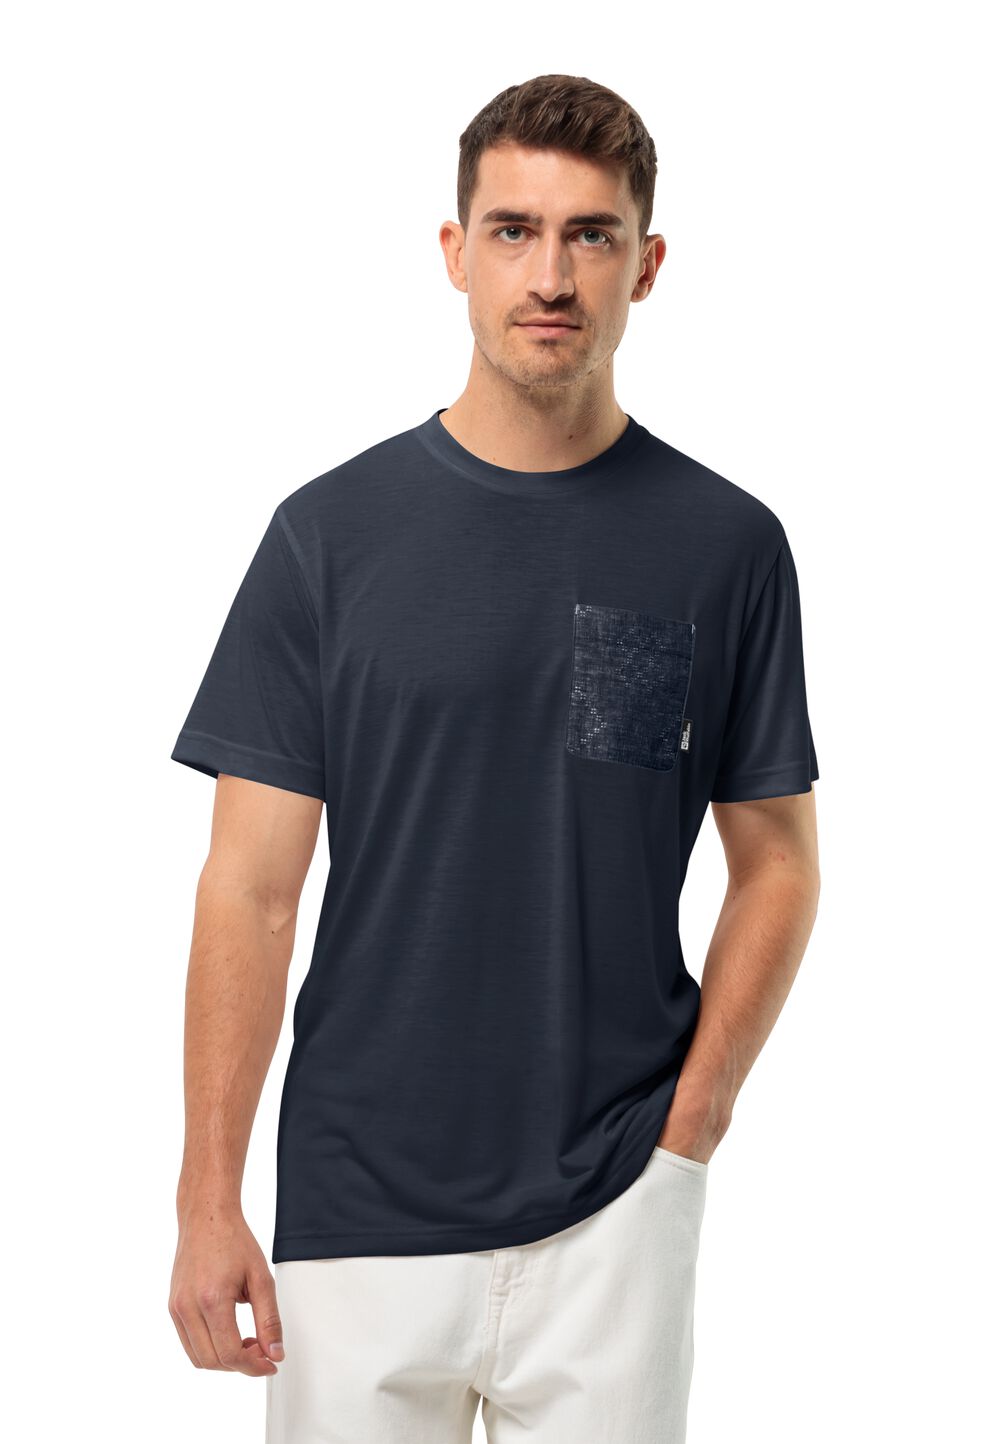 Jack Wolfskin Pocket Karana T-Shirt Men Functioneel shirt Heren L blue night blue